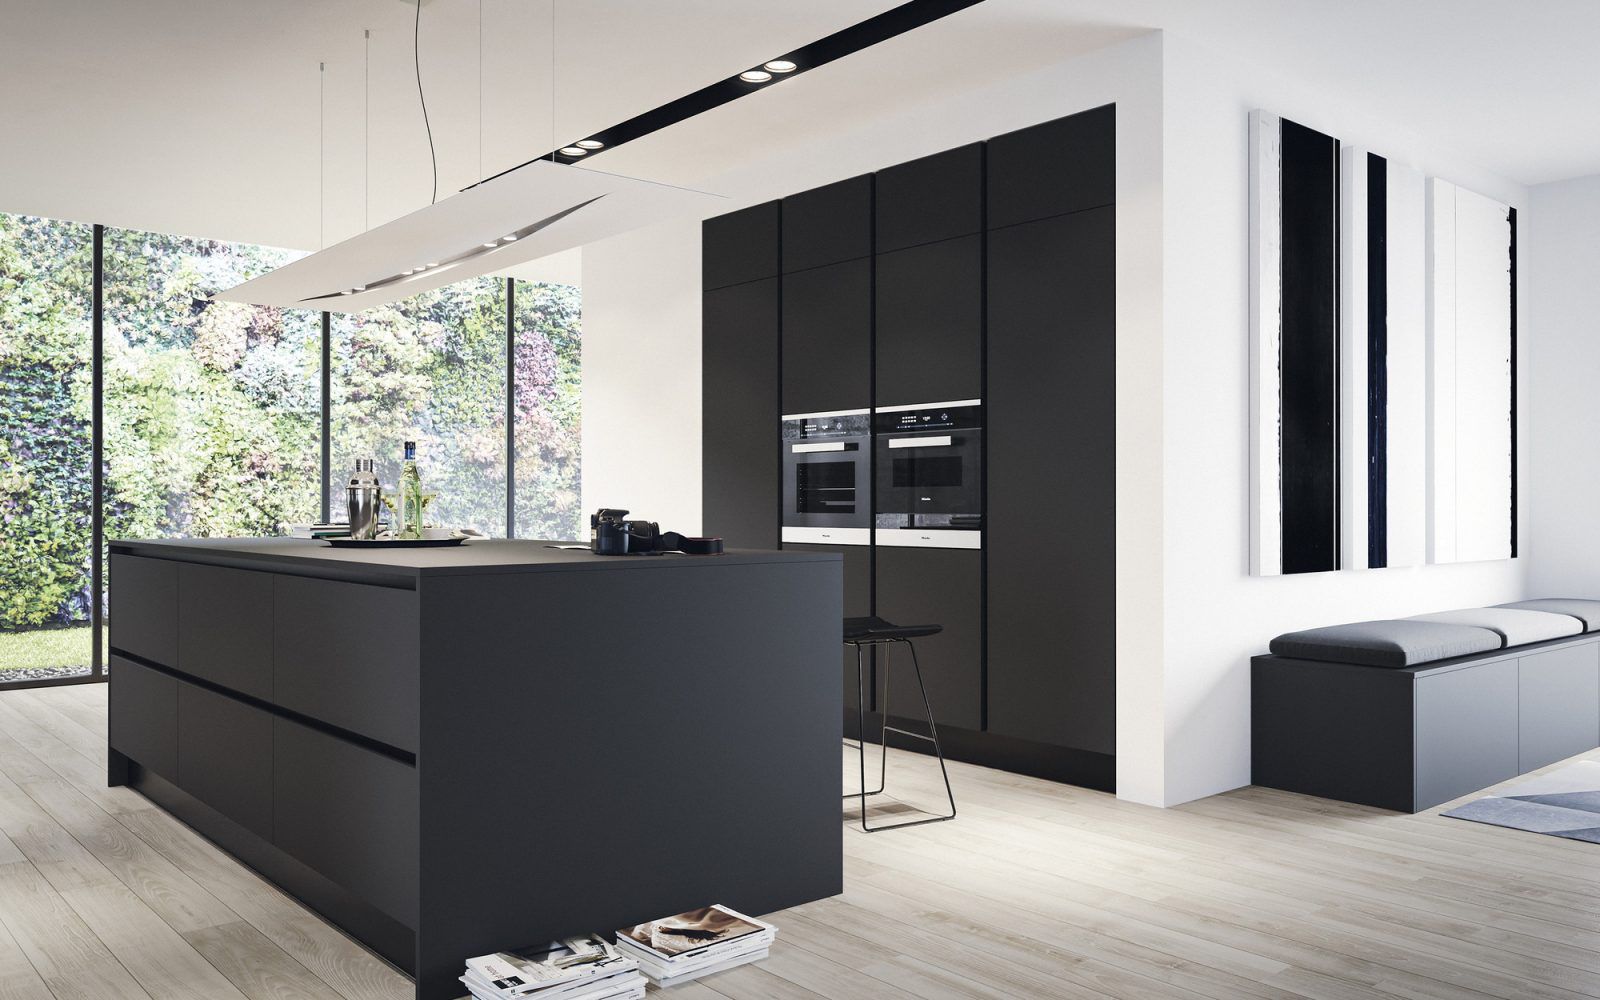 RM Living Cincinnati Contemporary Interior Design Modern Kitchen By Record